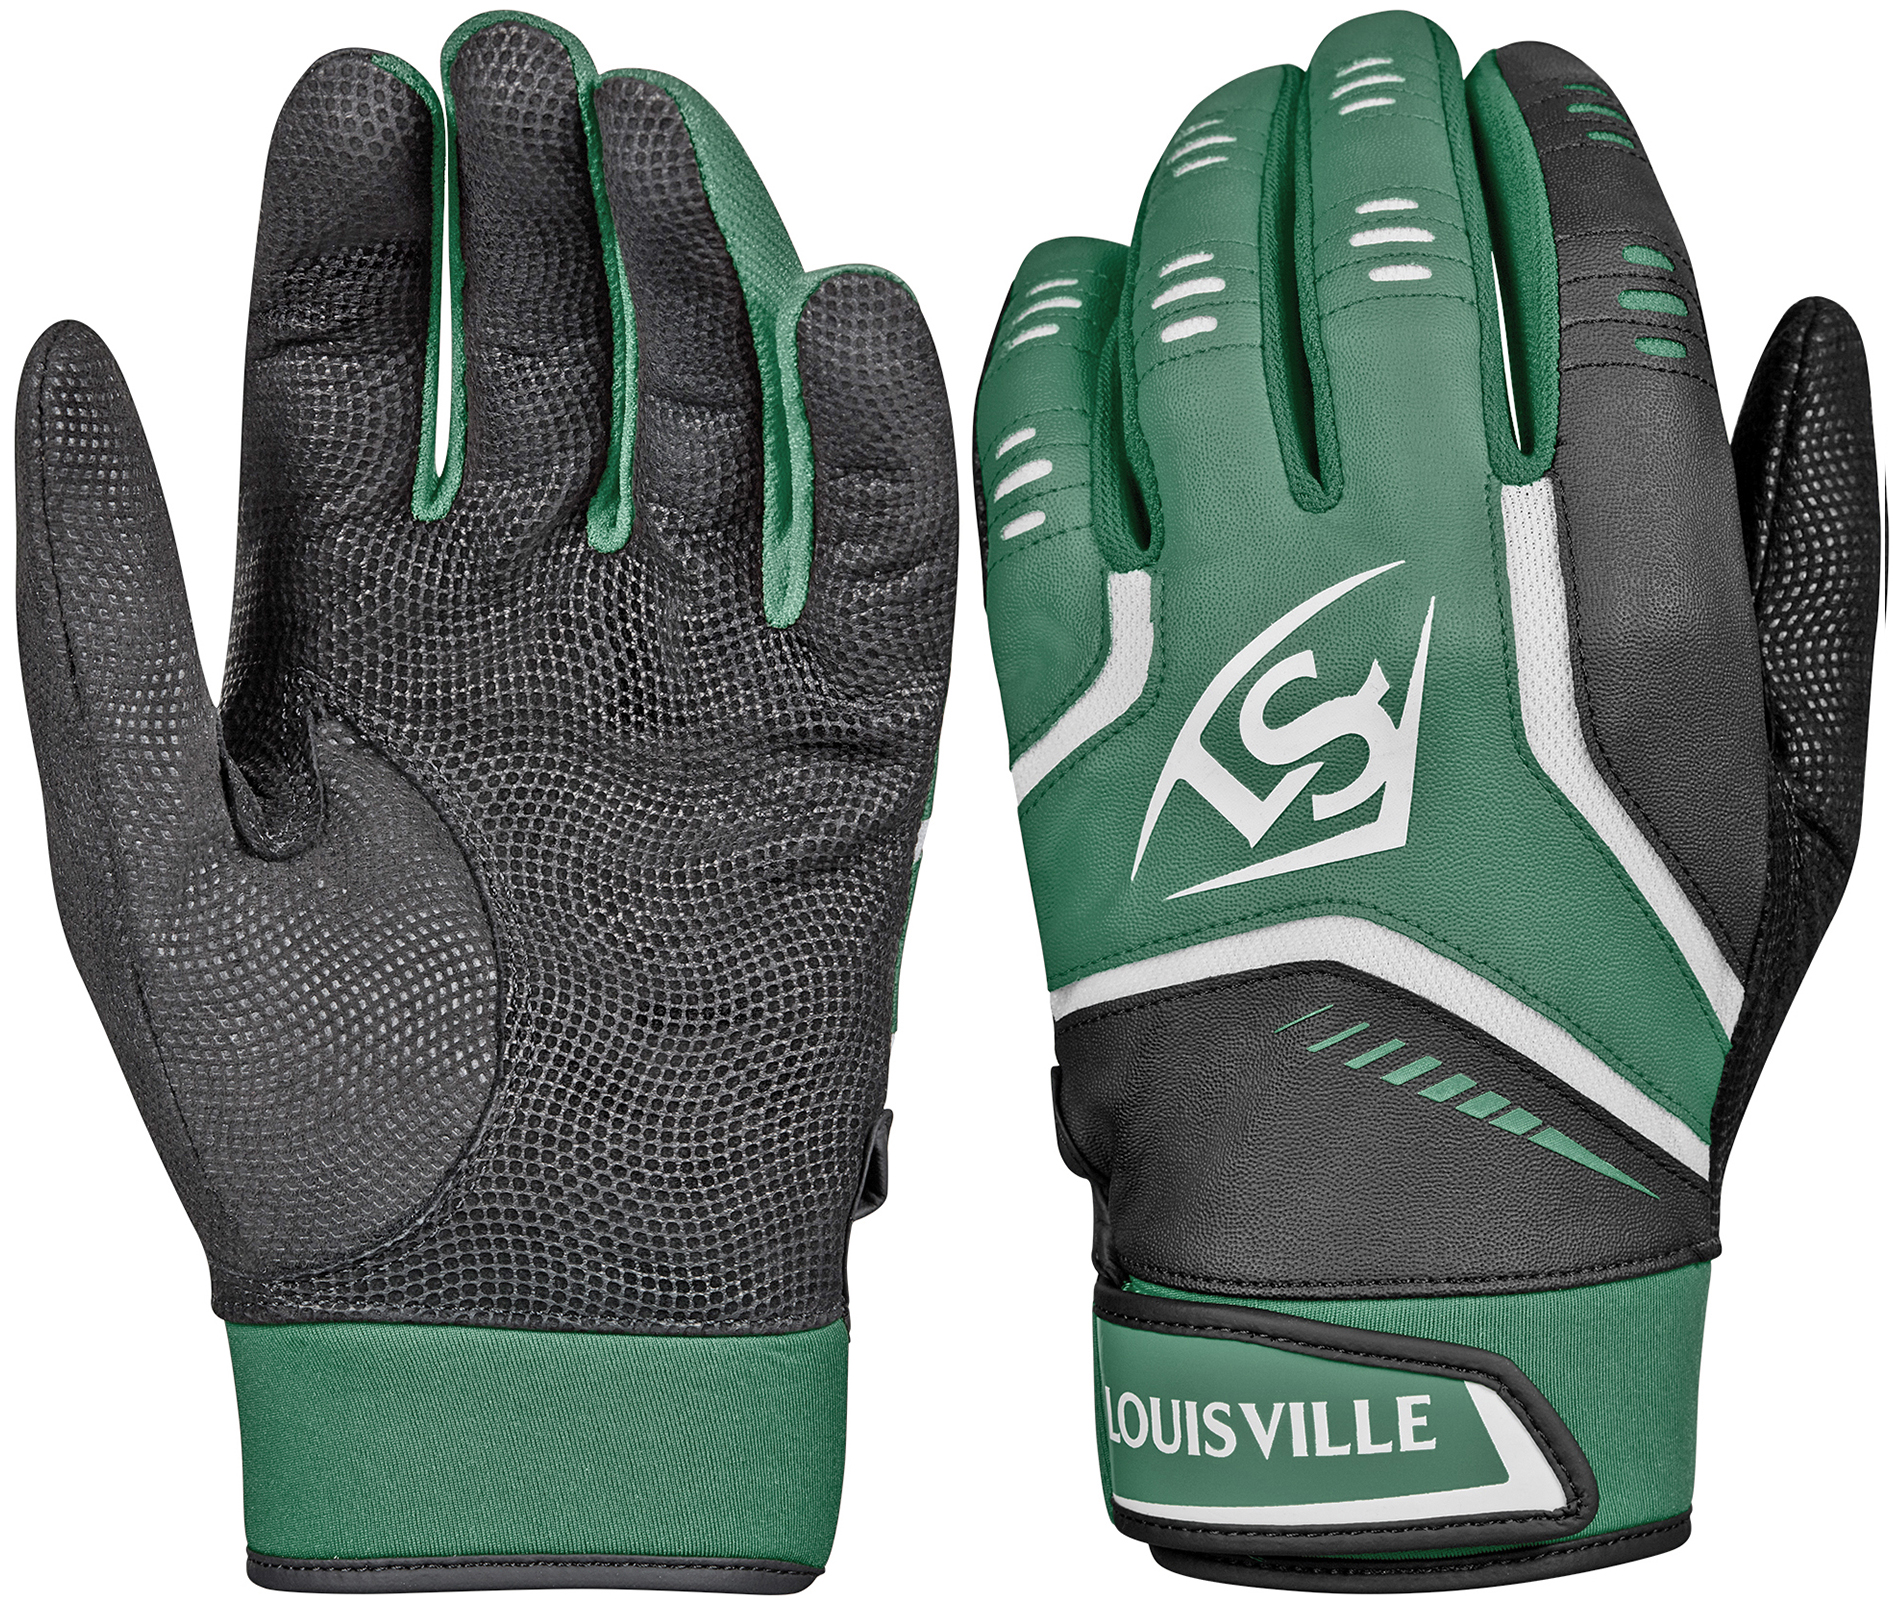 E126478 Louisville Slugger Omaha Batting Glove (pair)